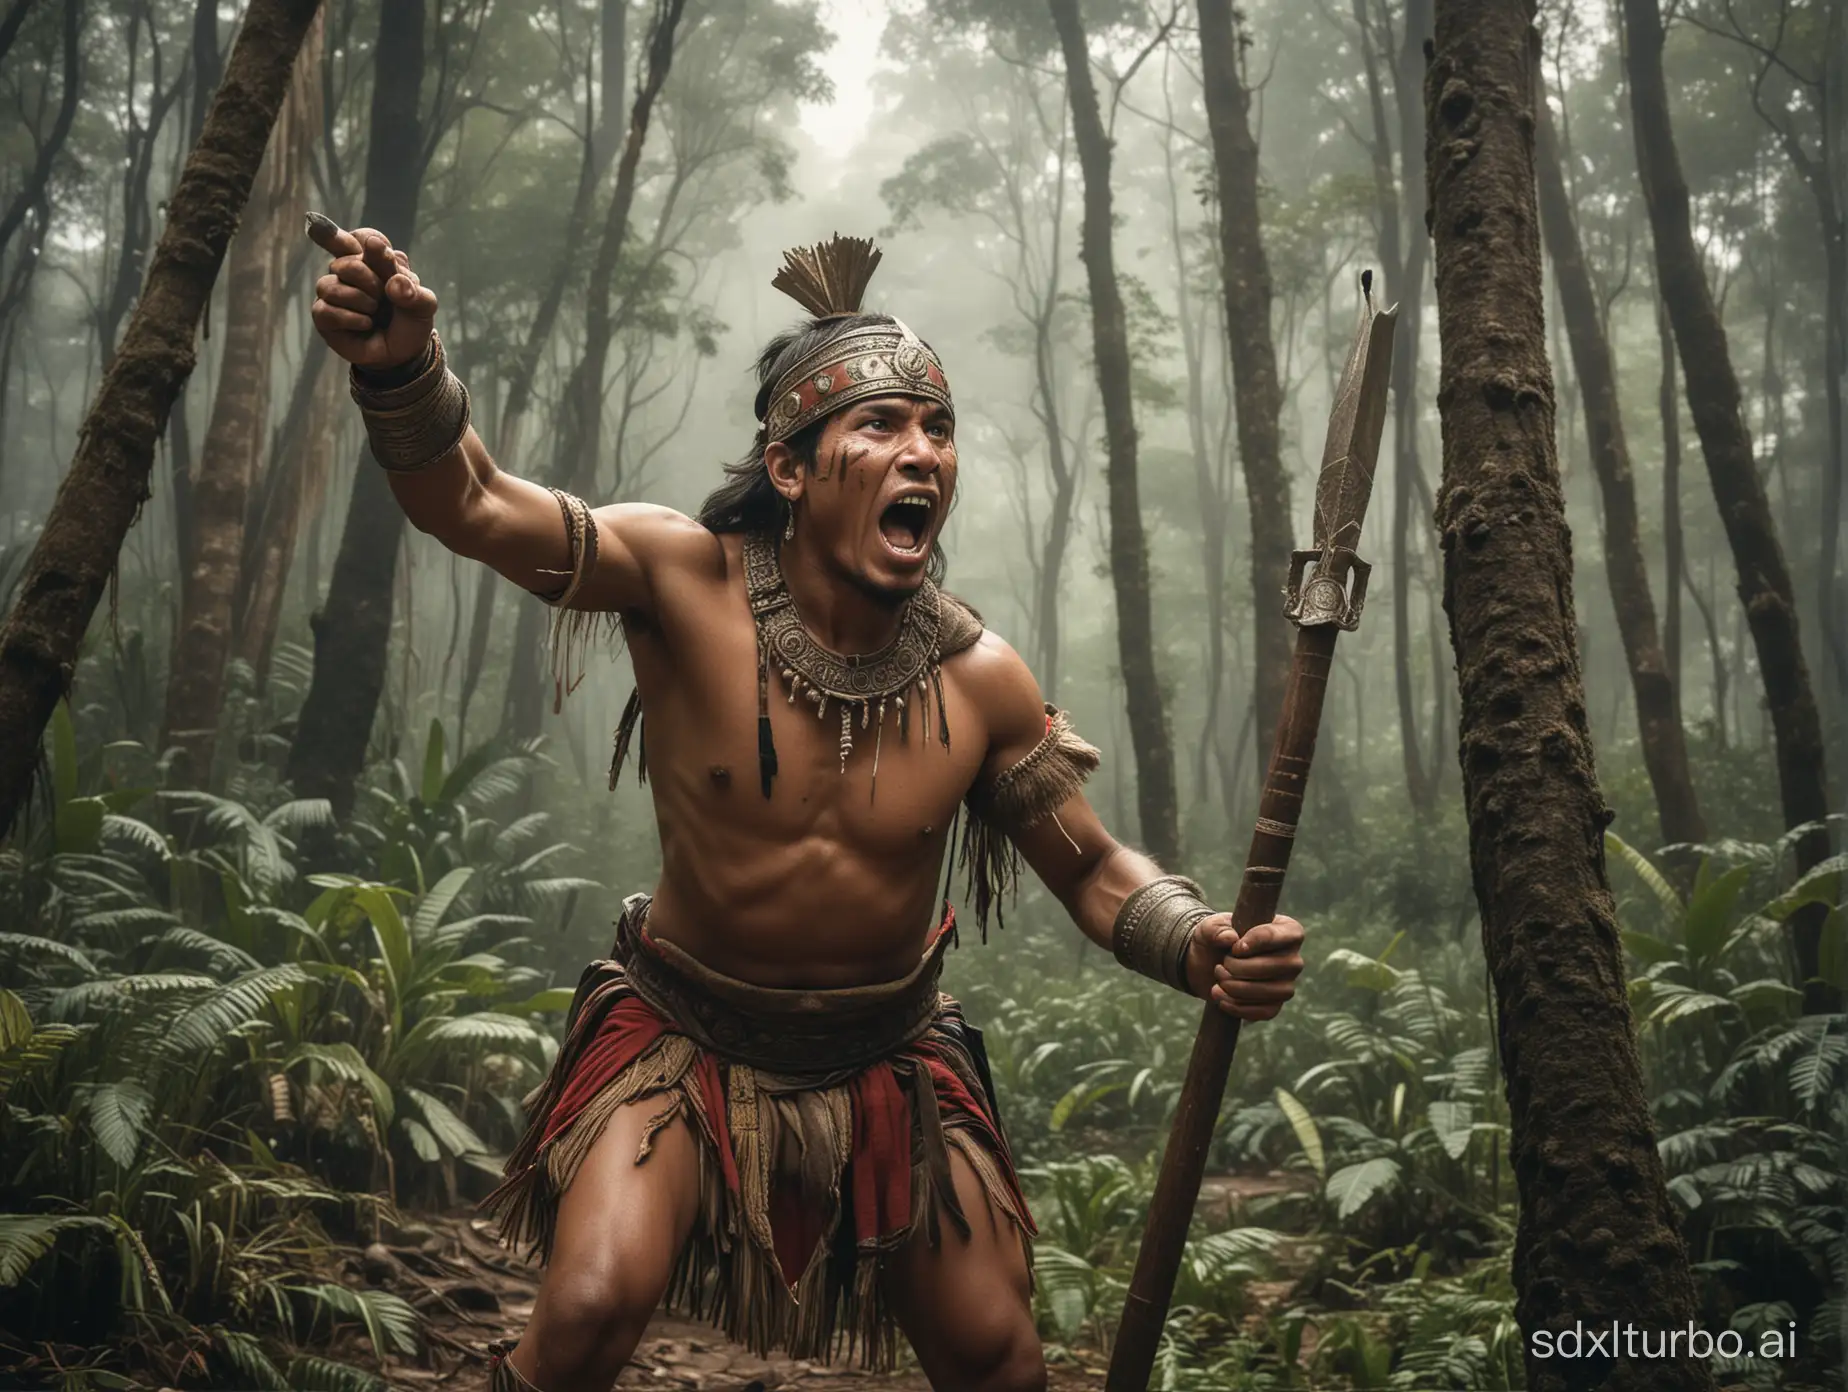 Inca-Warrior-Confrontation-in-16th-Century-Amazon-Forest